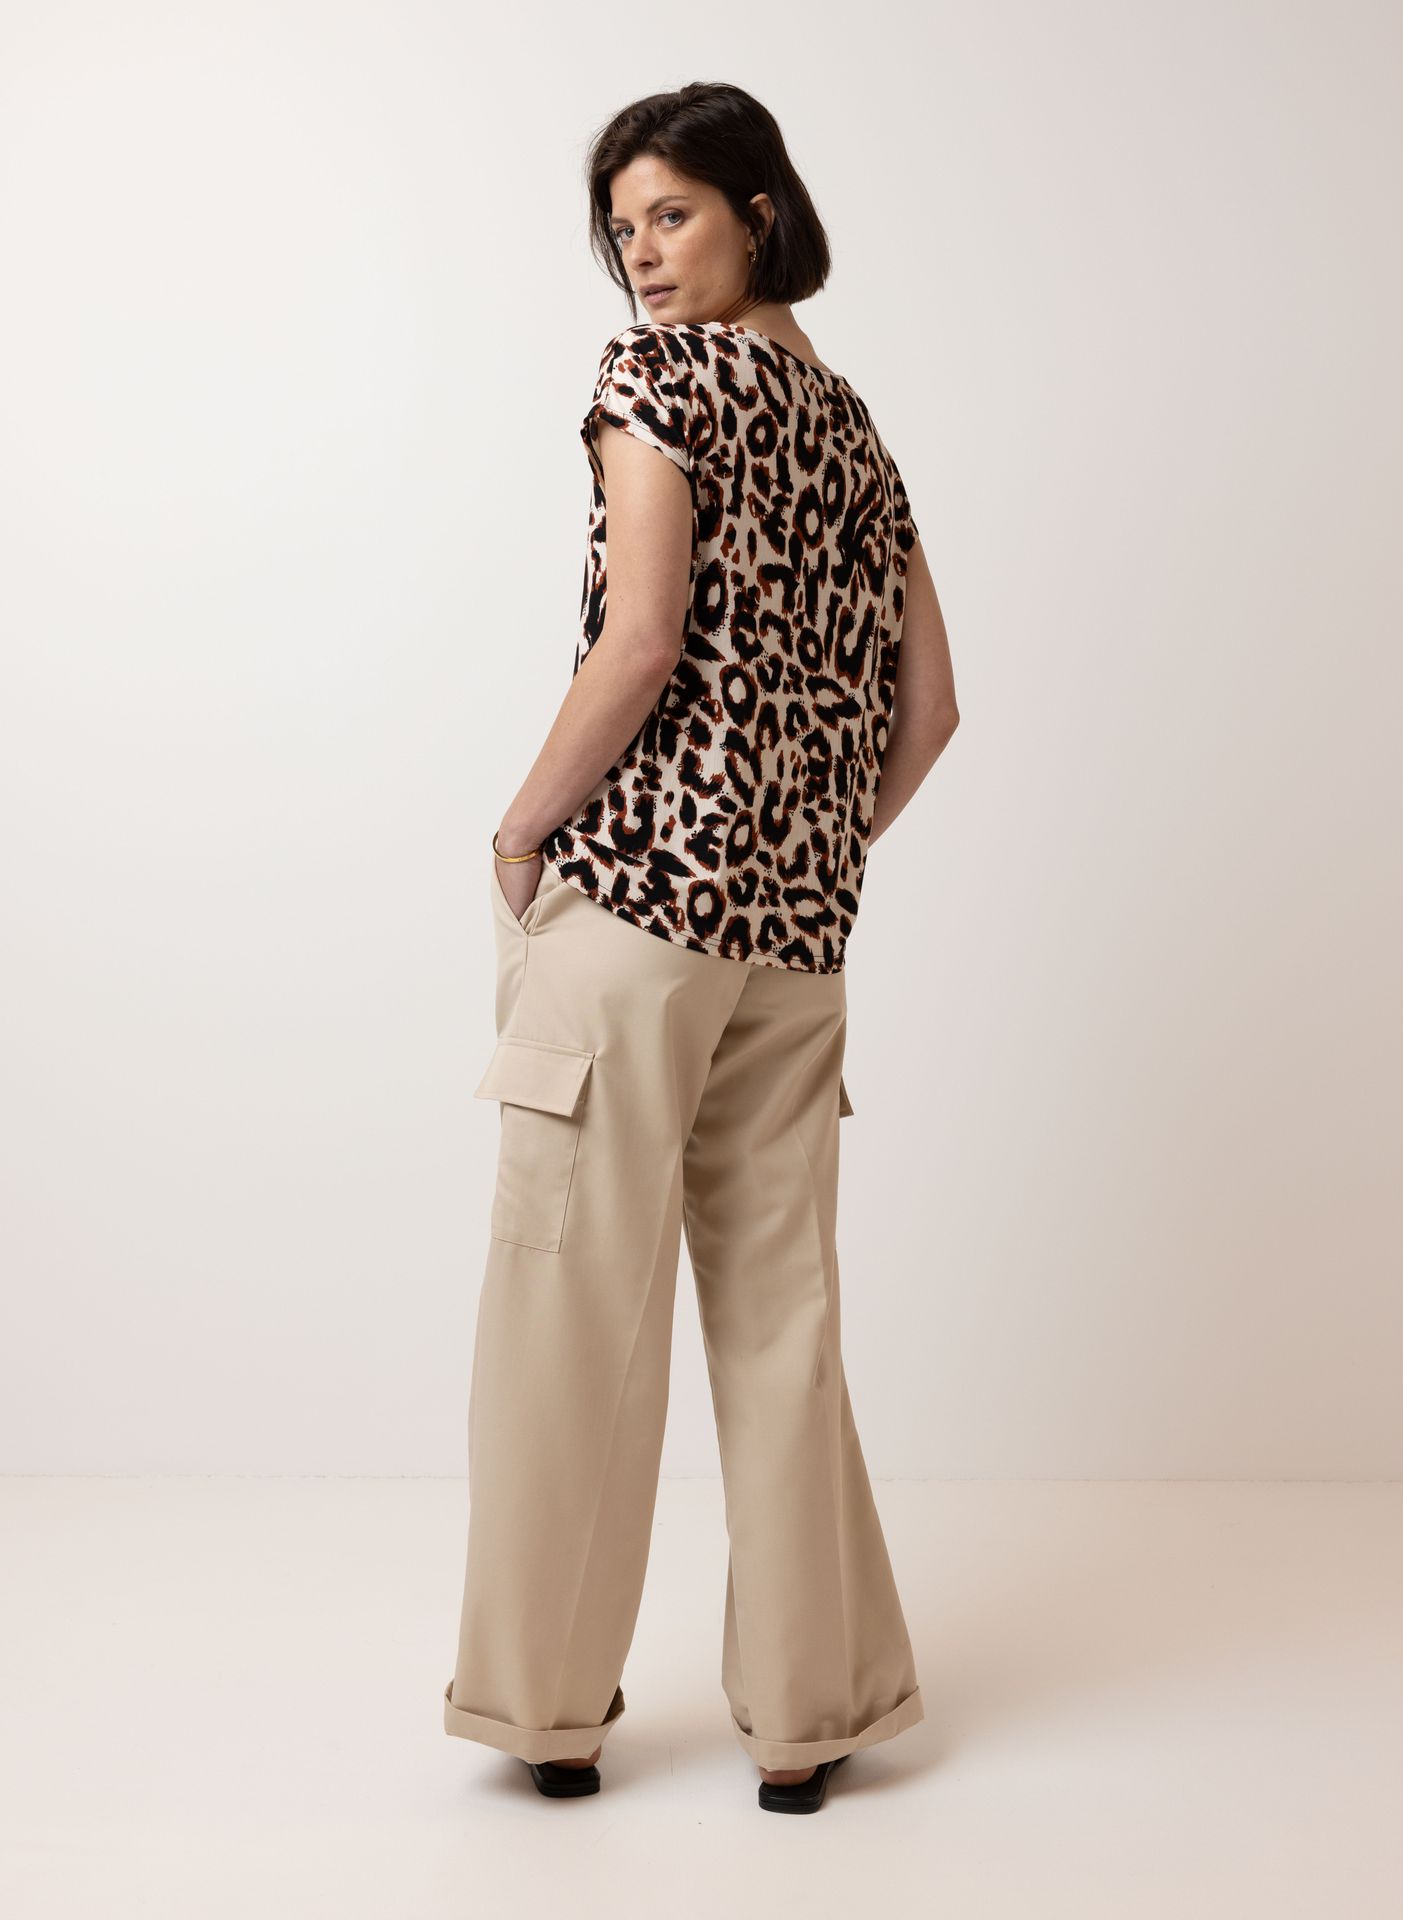 Norah Shirt luipaardprint brown multicolor 212766-220